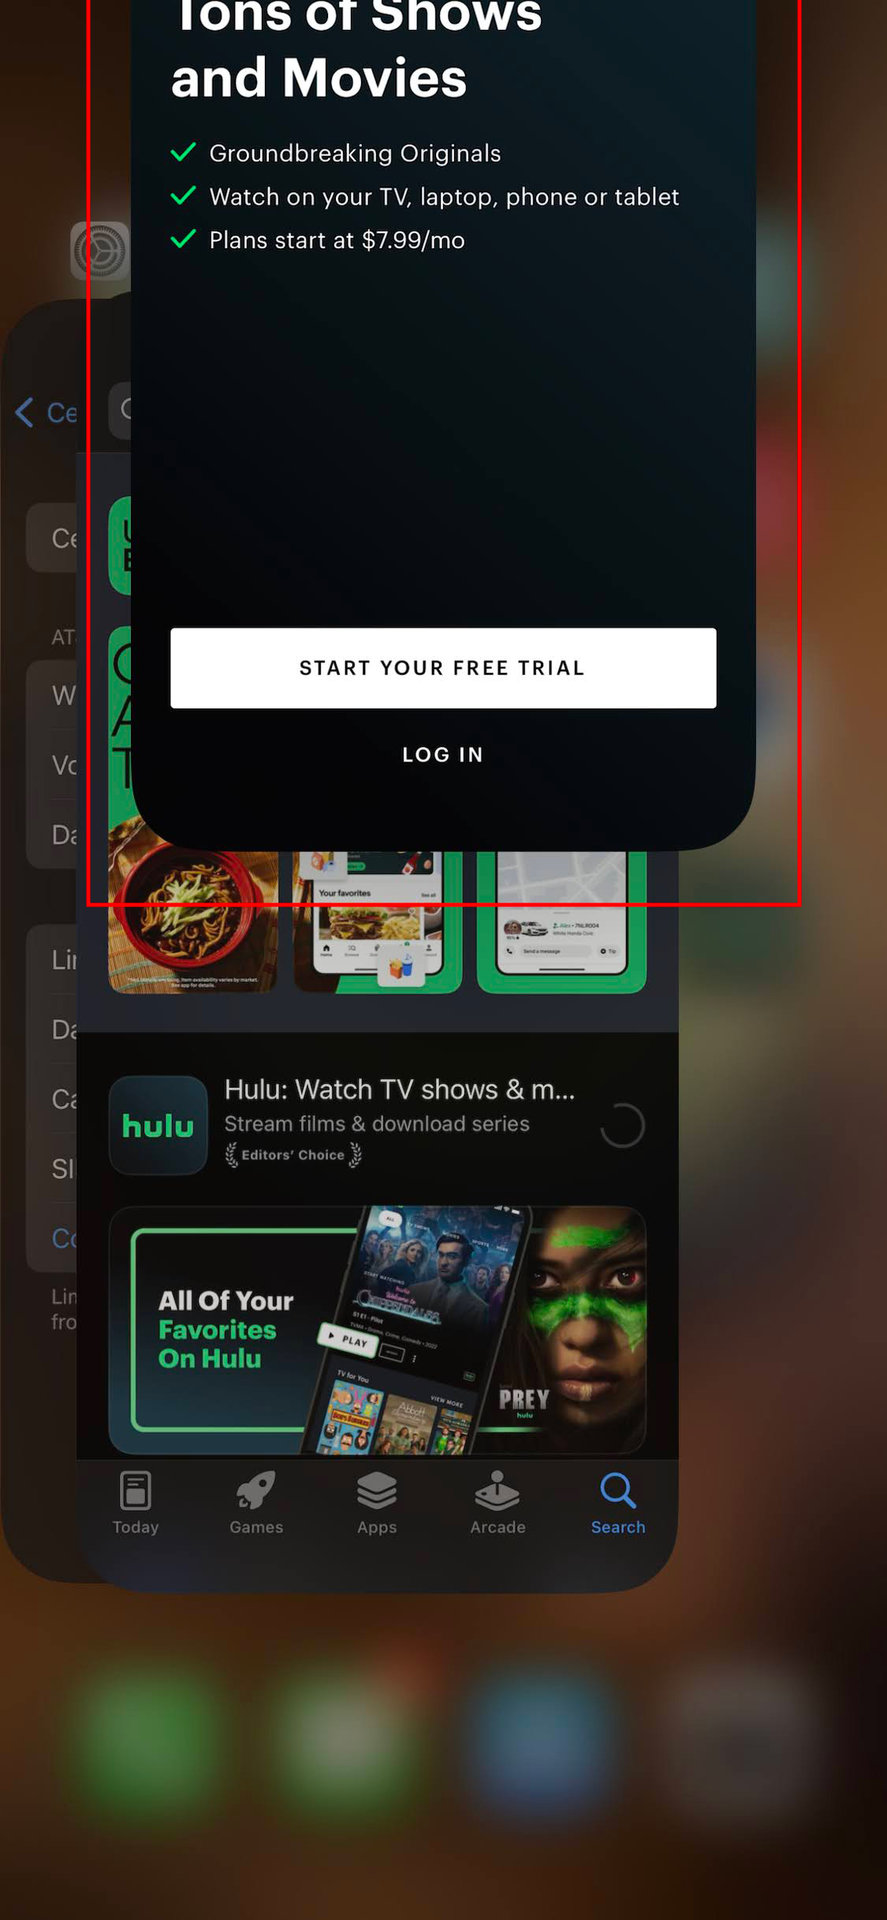 How to close Hulu on iOS 2